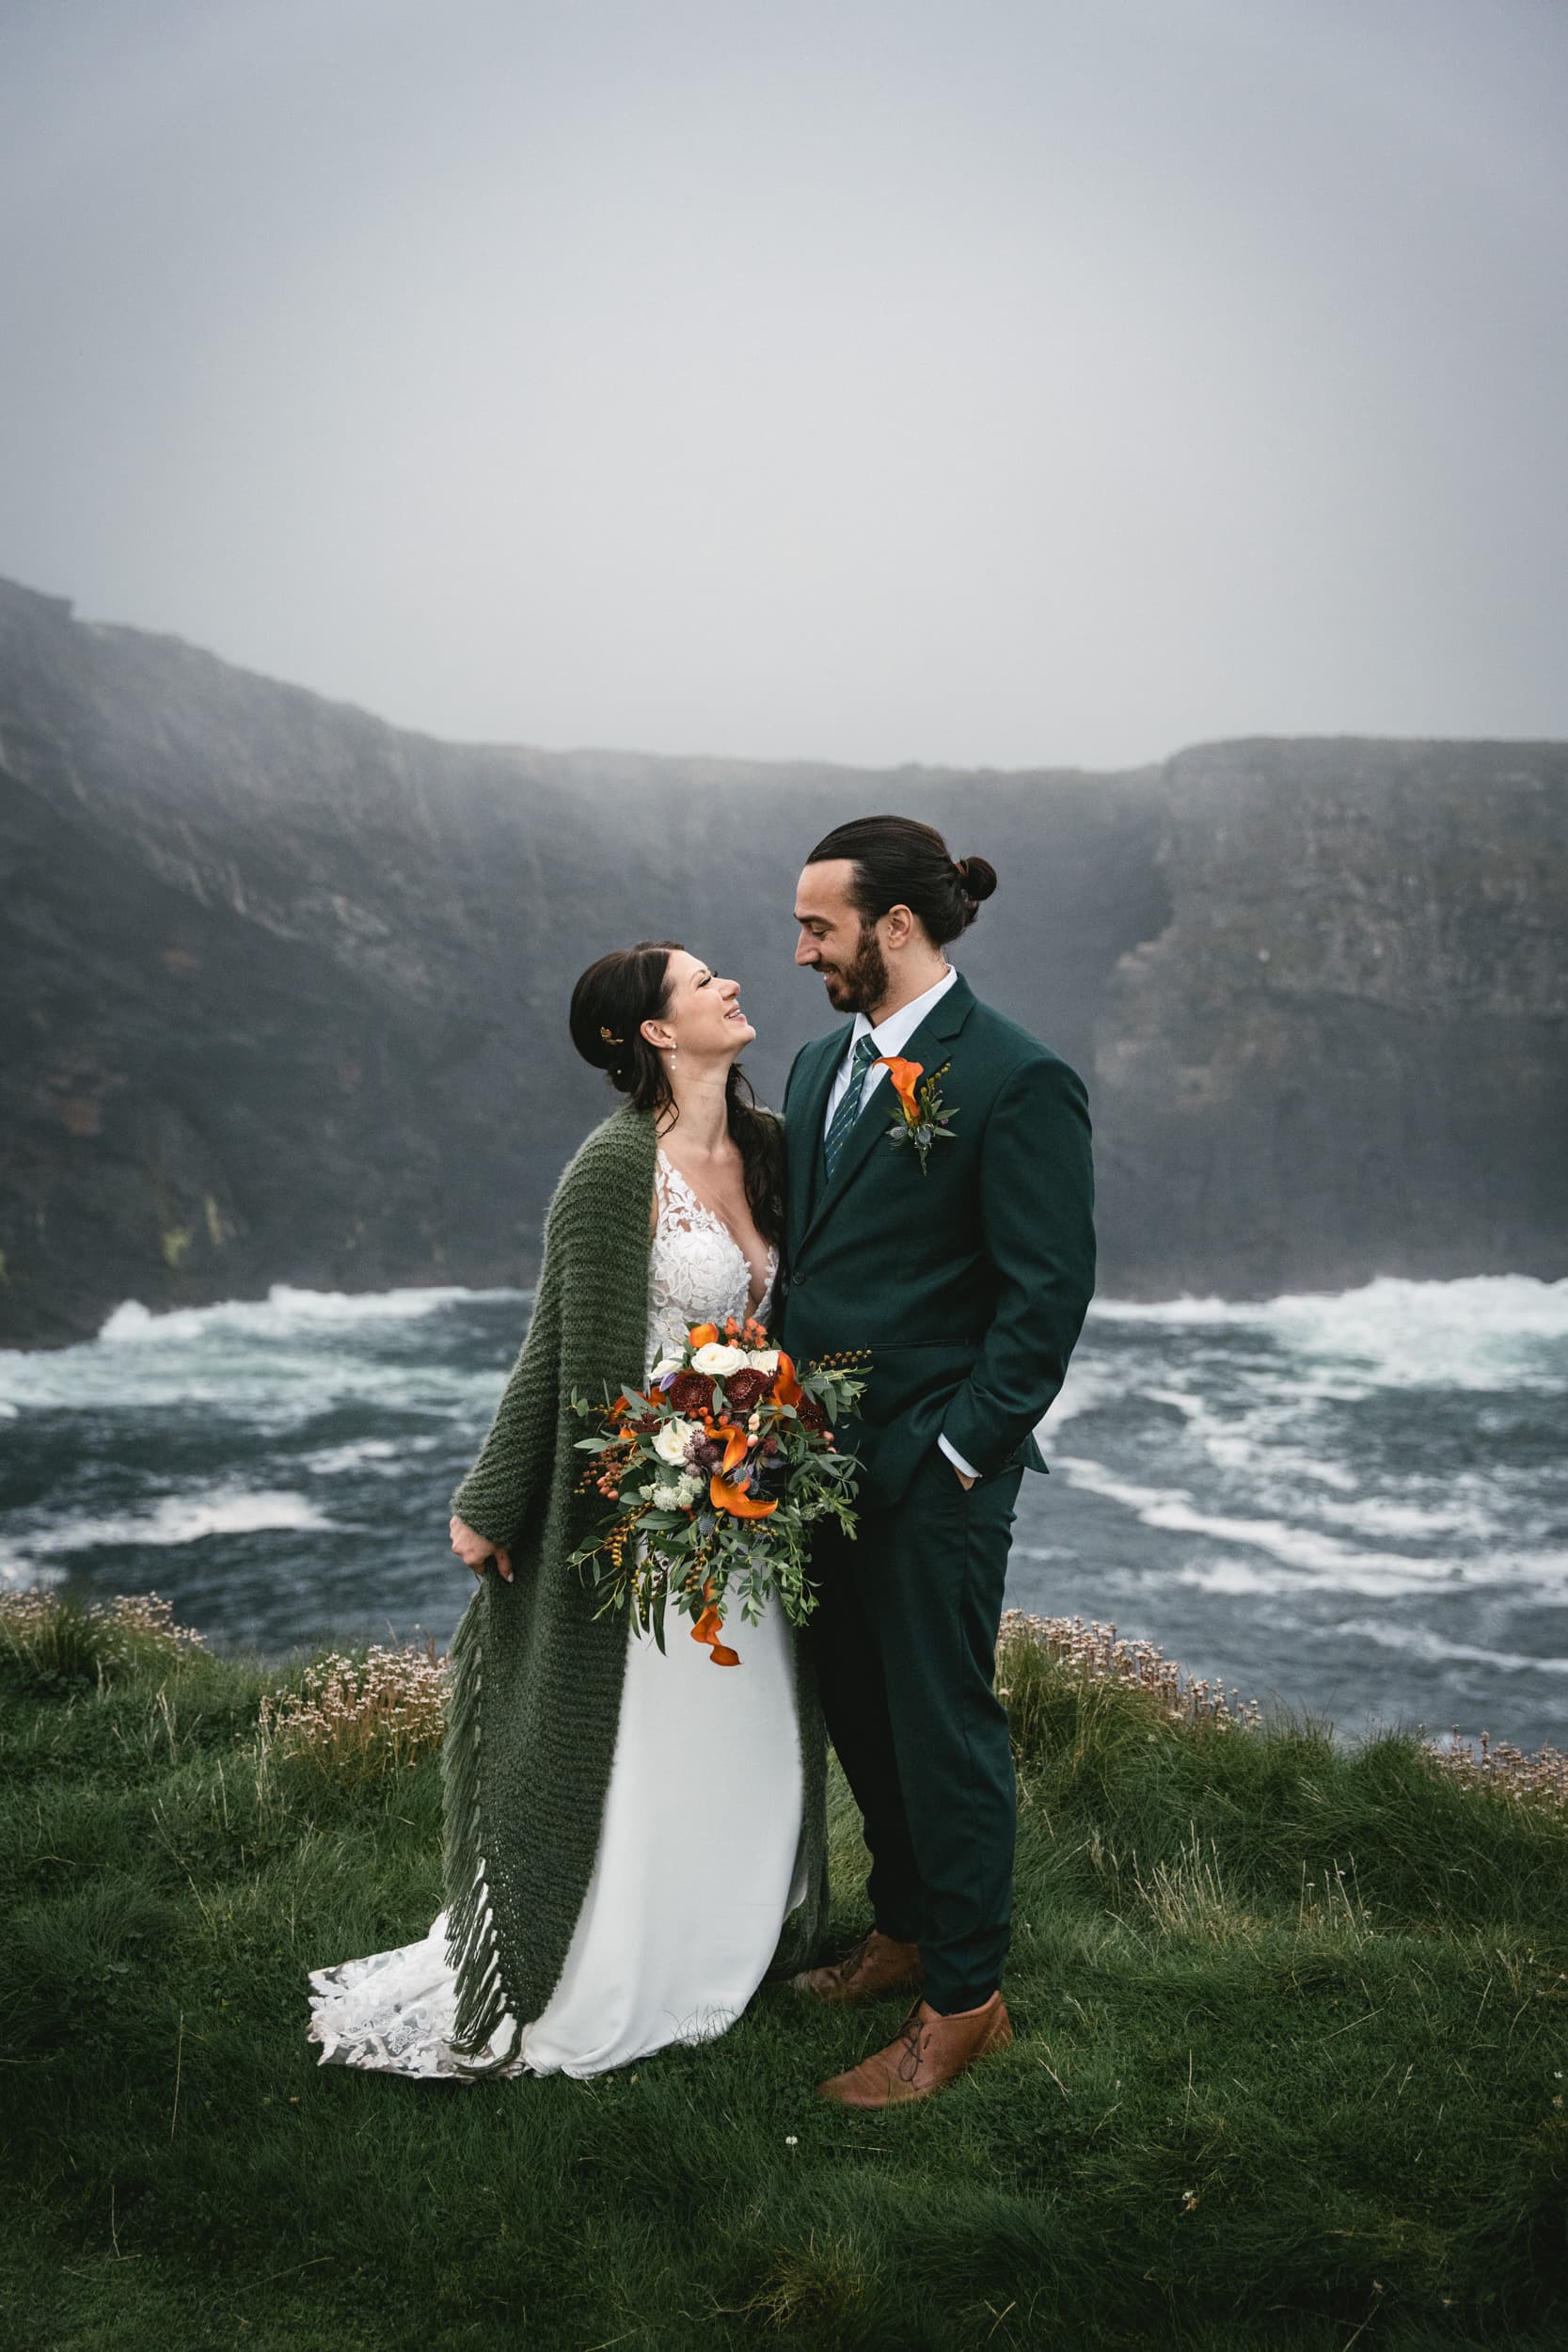 Jesse and Sal's Irish elopement: Love in the wild beauty of Ireland.